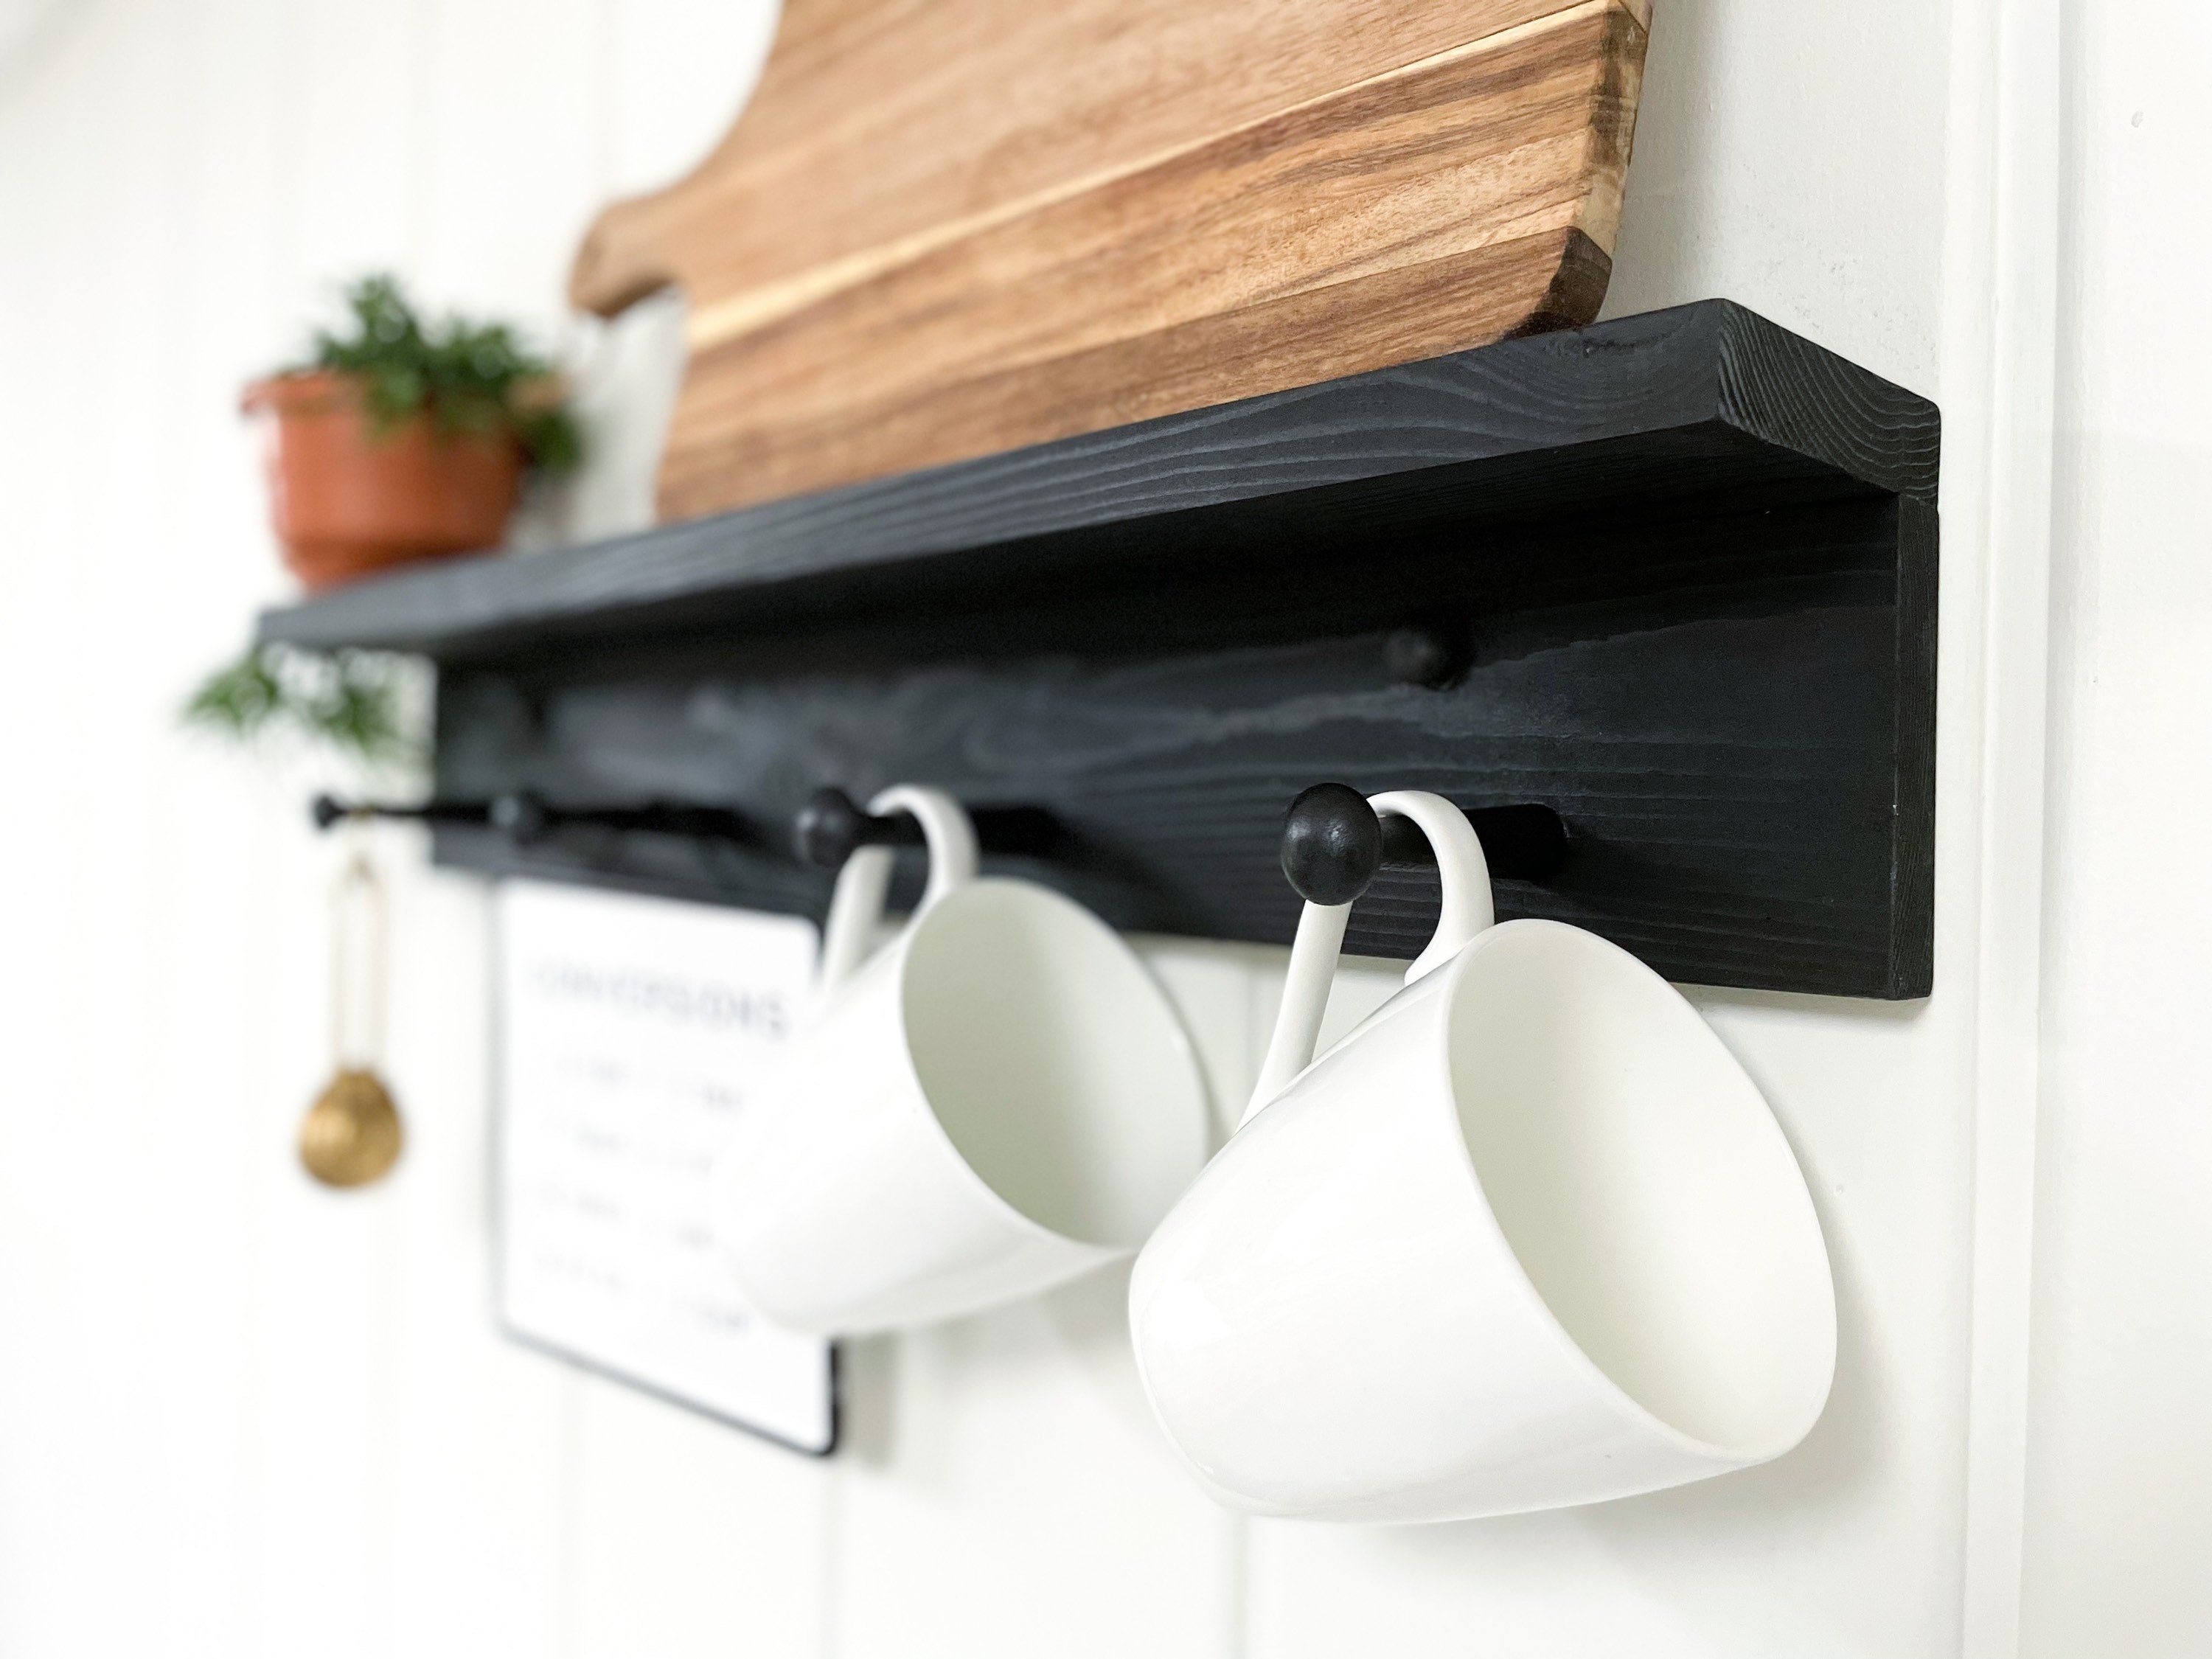 32х26 Inches Wooden Coffee Mug Shelf Wall Decor, Nursery Shelf, Kids  Shelves, Country Mug Rack, Kitchen Shelf, Coffee Bar, Coffee Cup Holder -   Norway